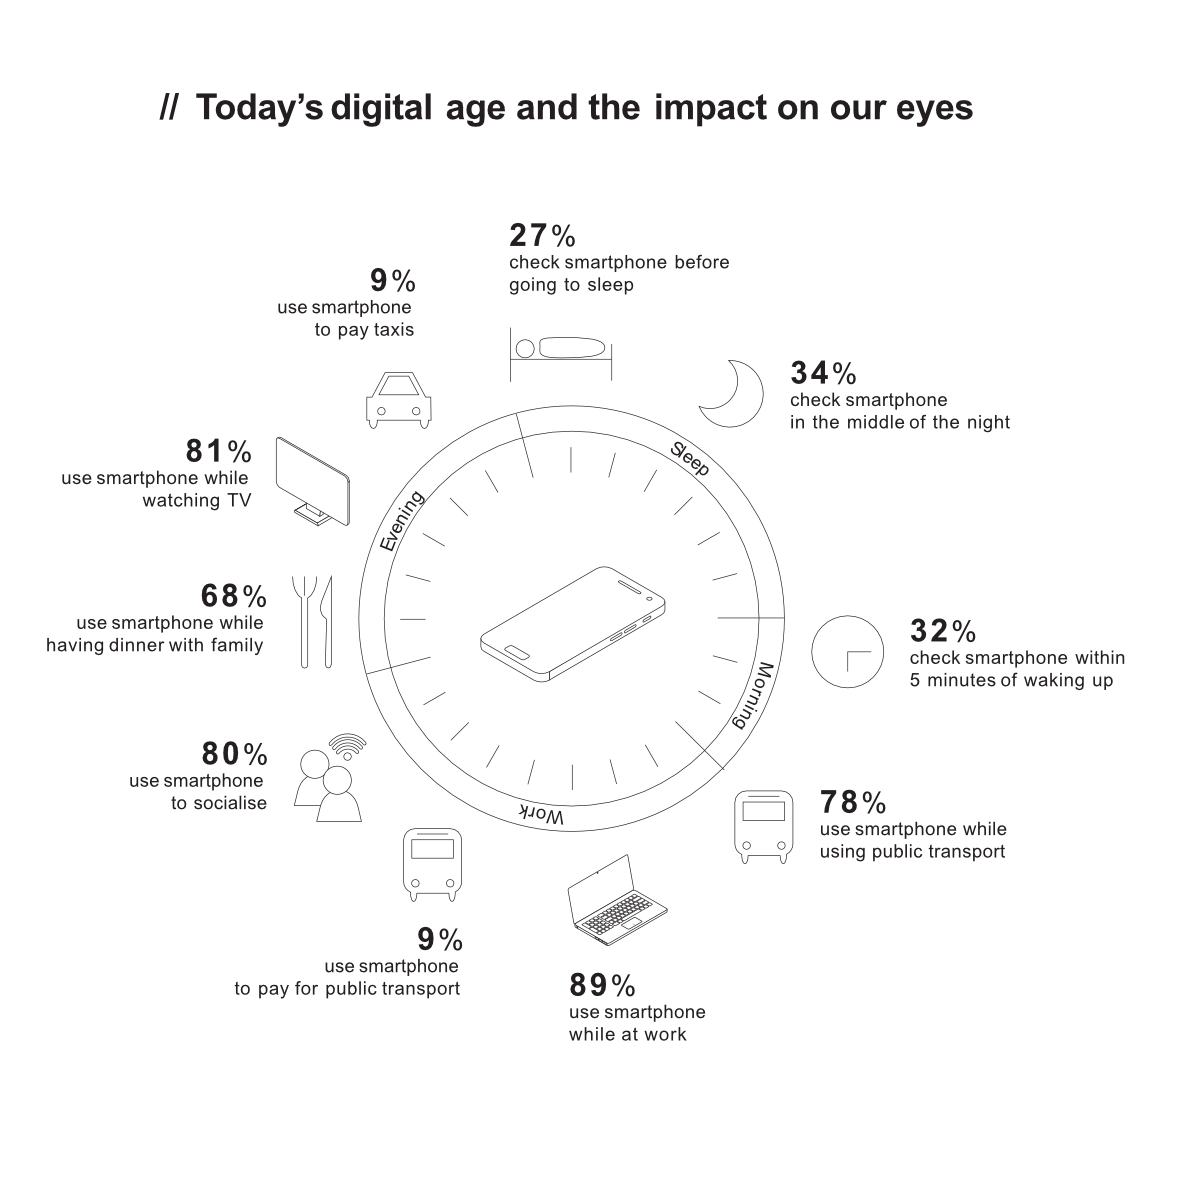 digital age_impact on eyes